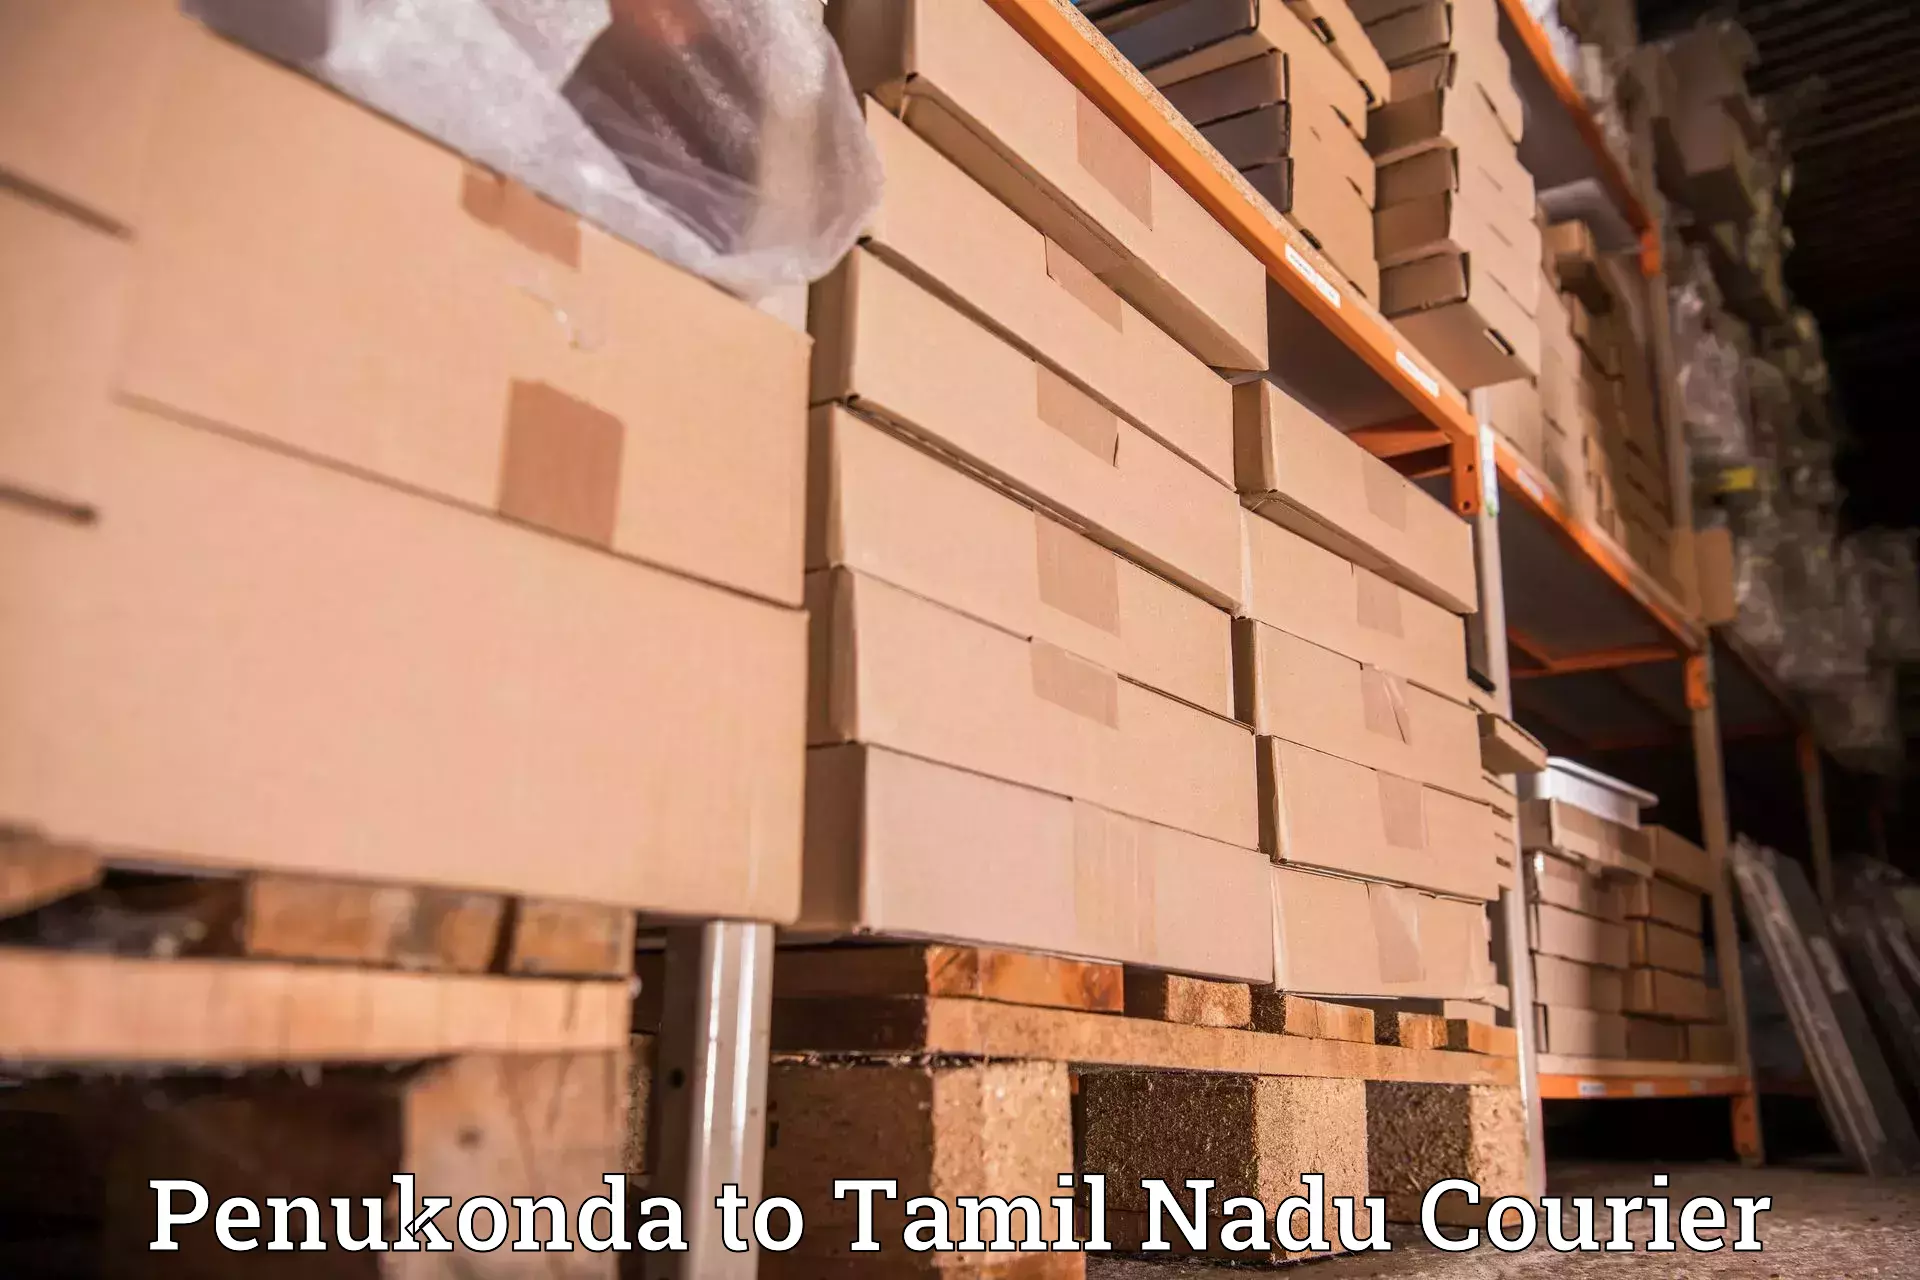 24-hour delivery options in Penukonda to Tamil Nadu